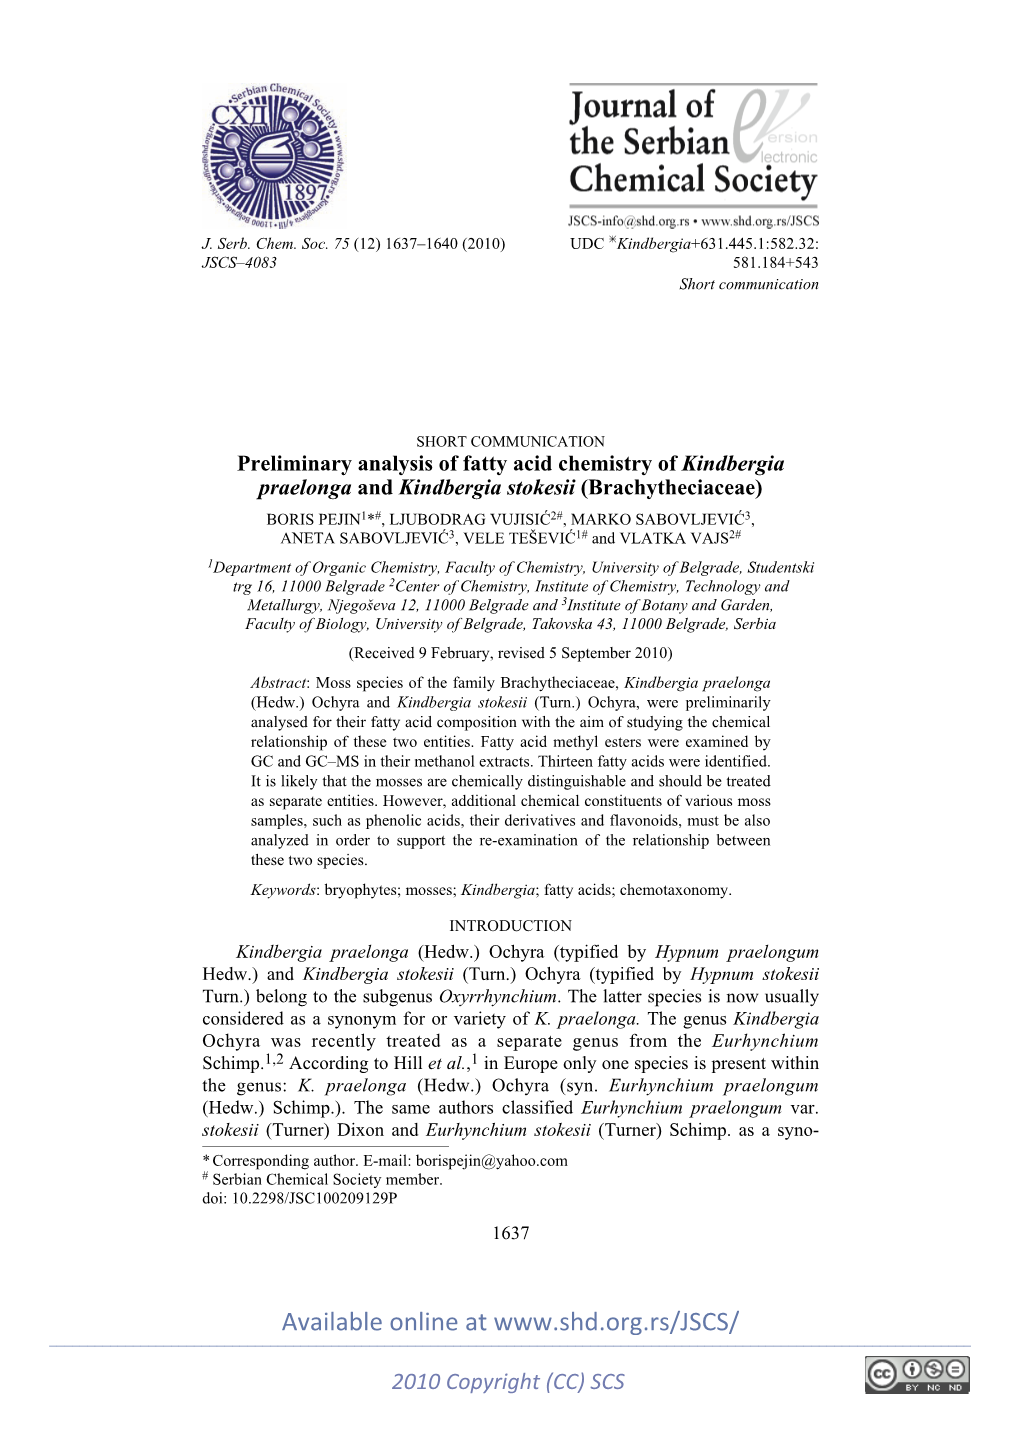 Preliminary Analysis of Fatty Acid Chemistry of Kindbergia Praelonga and Kindbergia Stokesii (Brachytheciaceae)